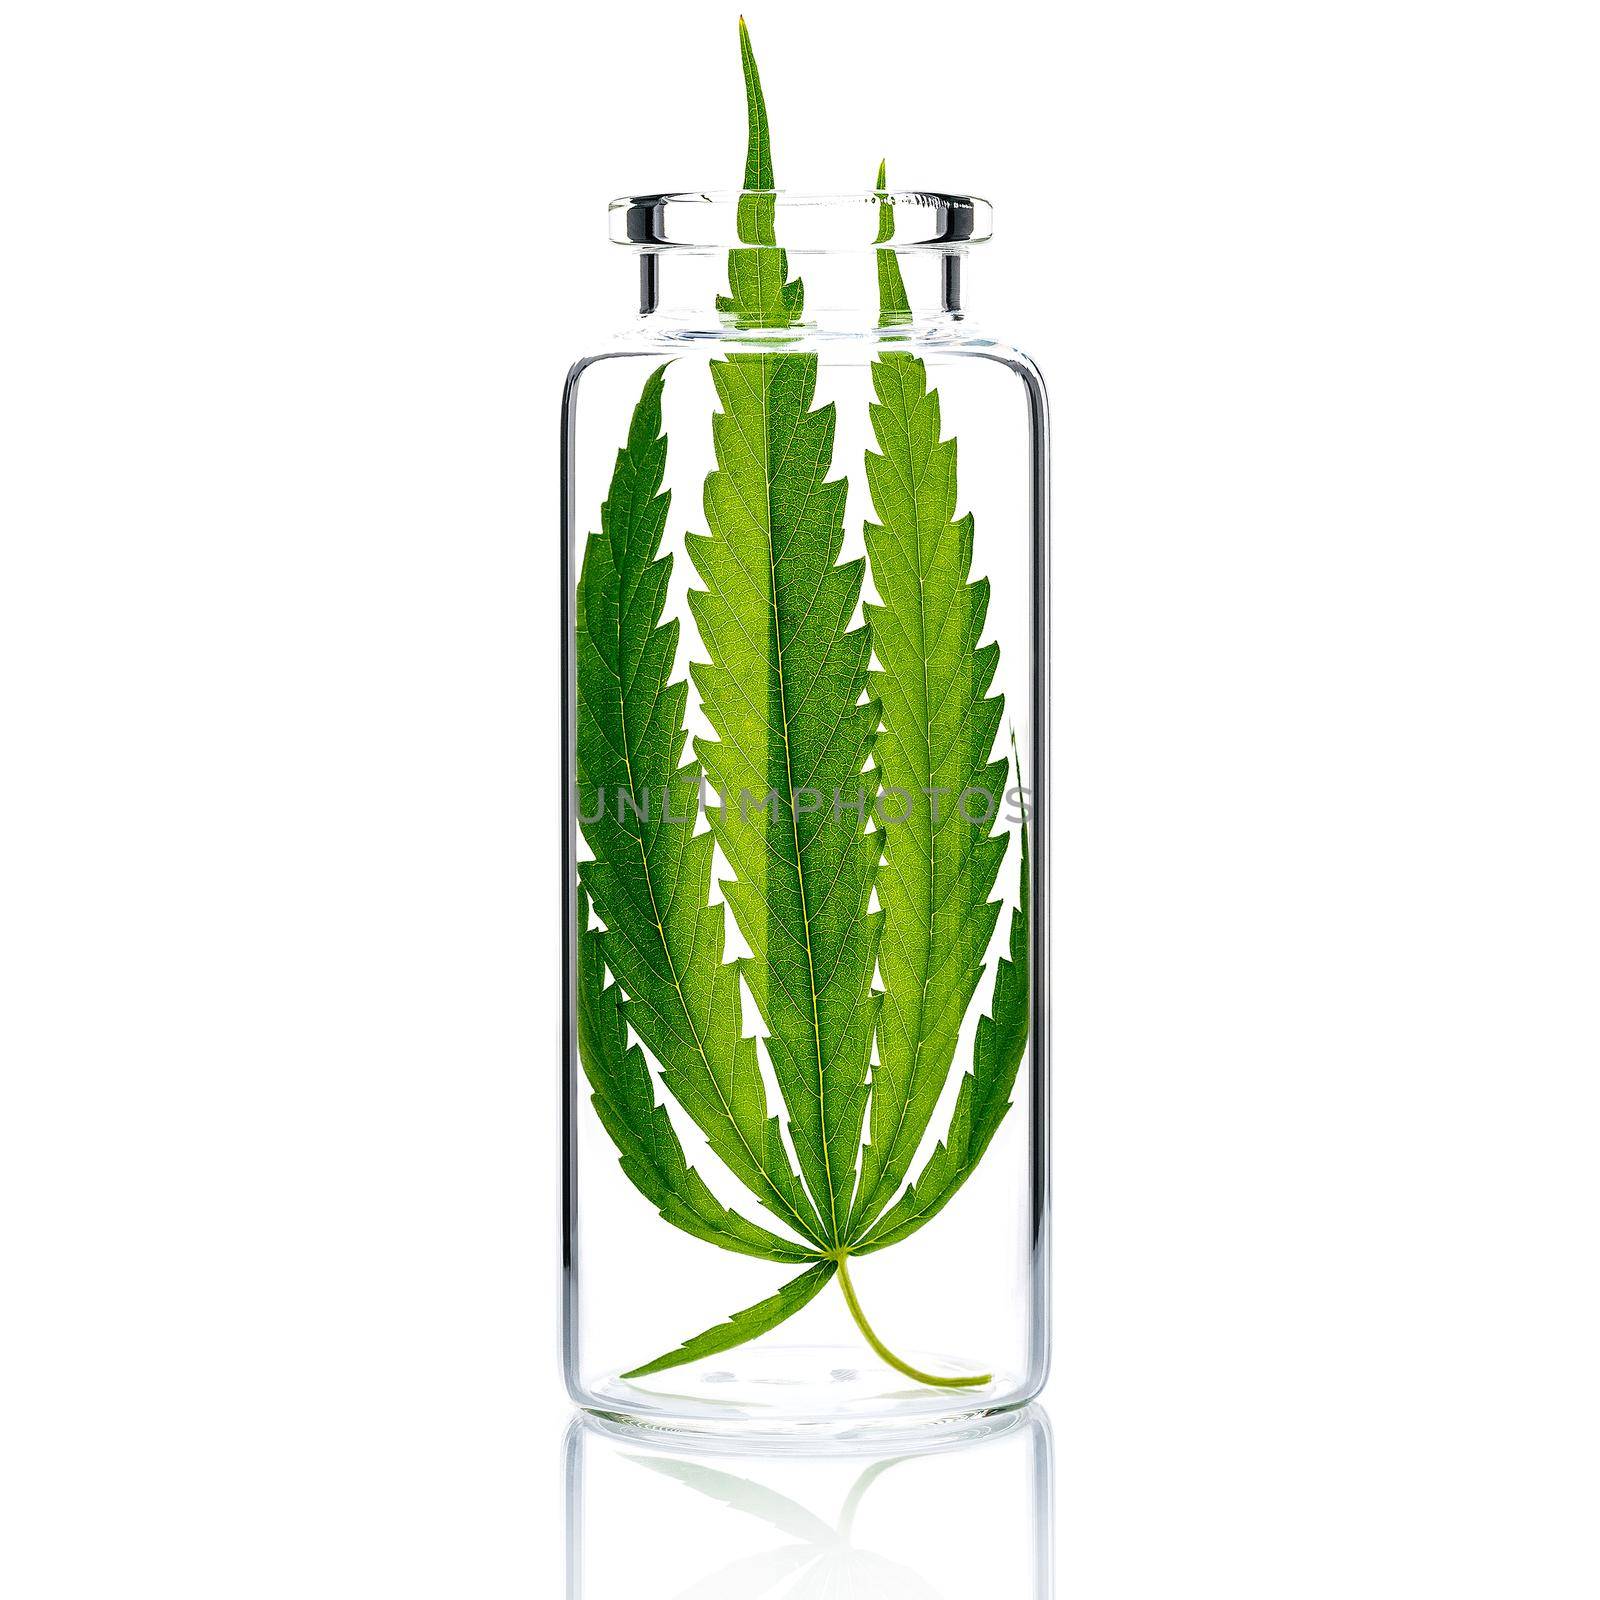 Hemp leaves in glass bottle  isolate on white background.